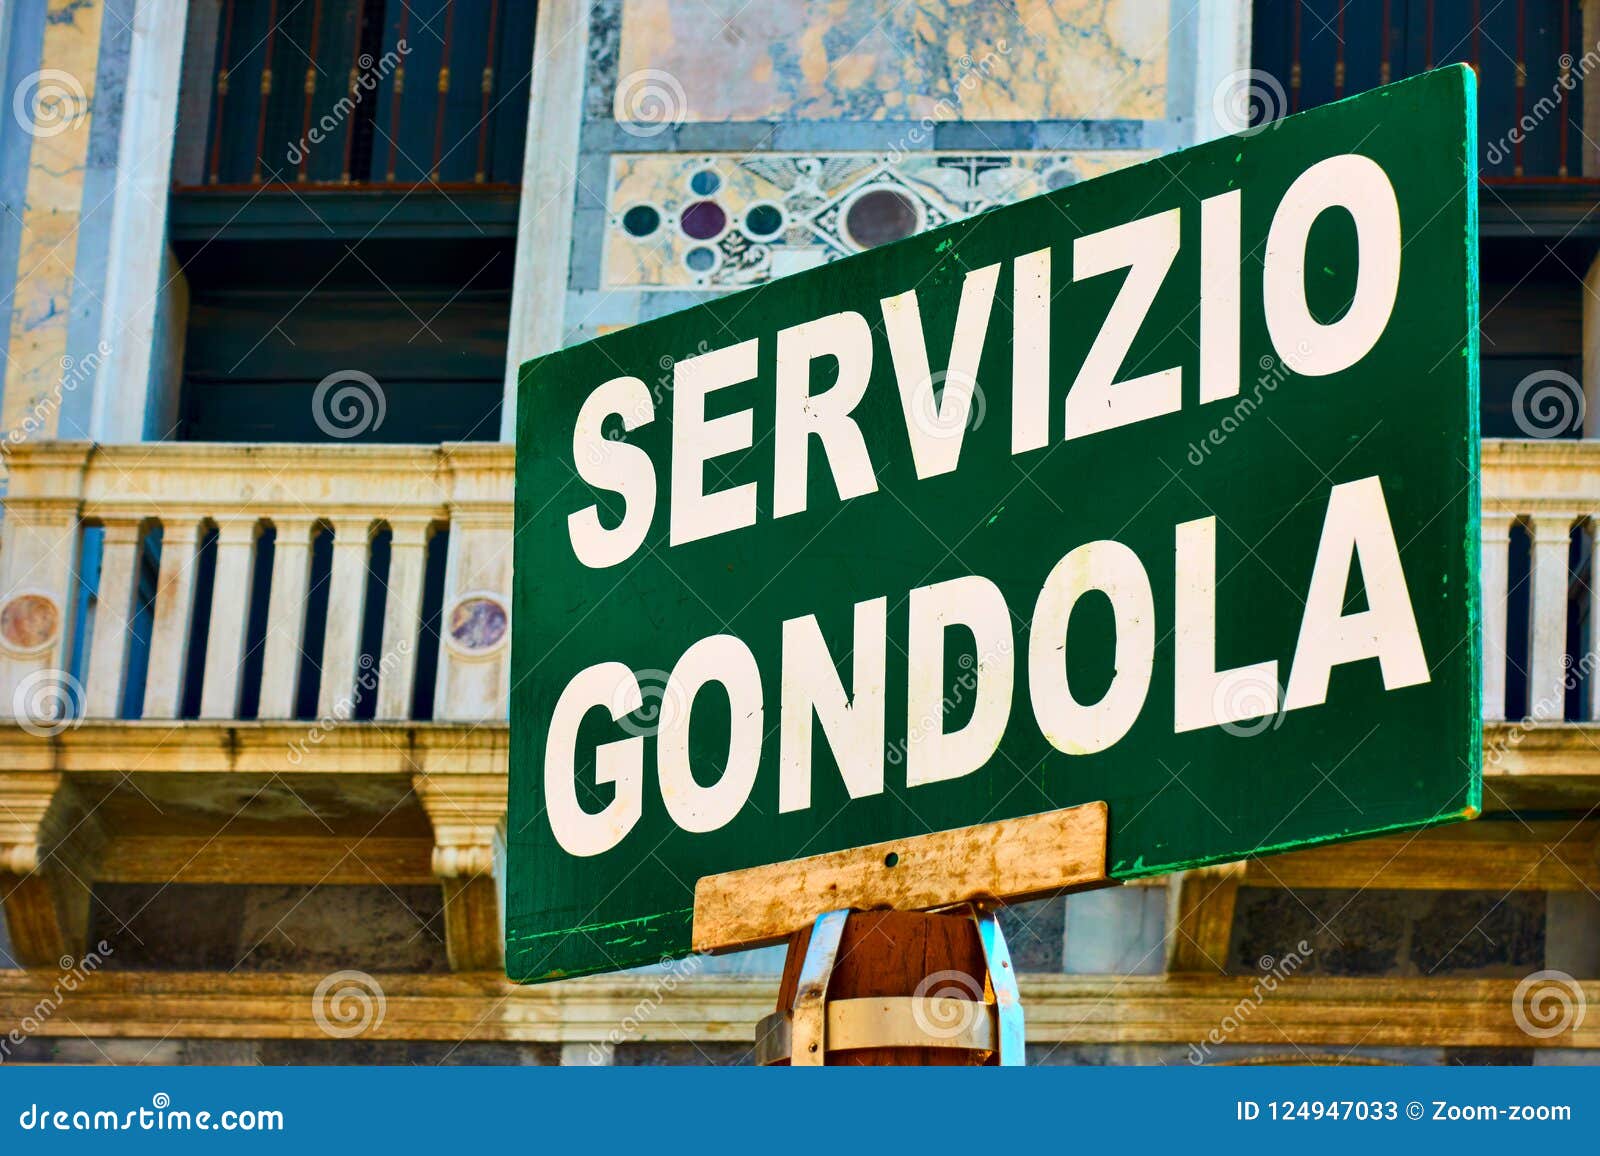 gondola service sign